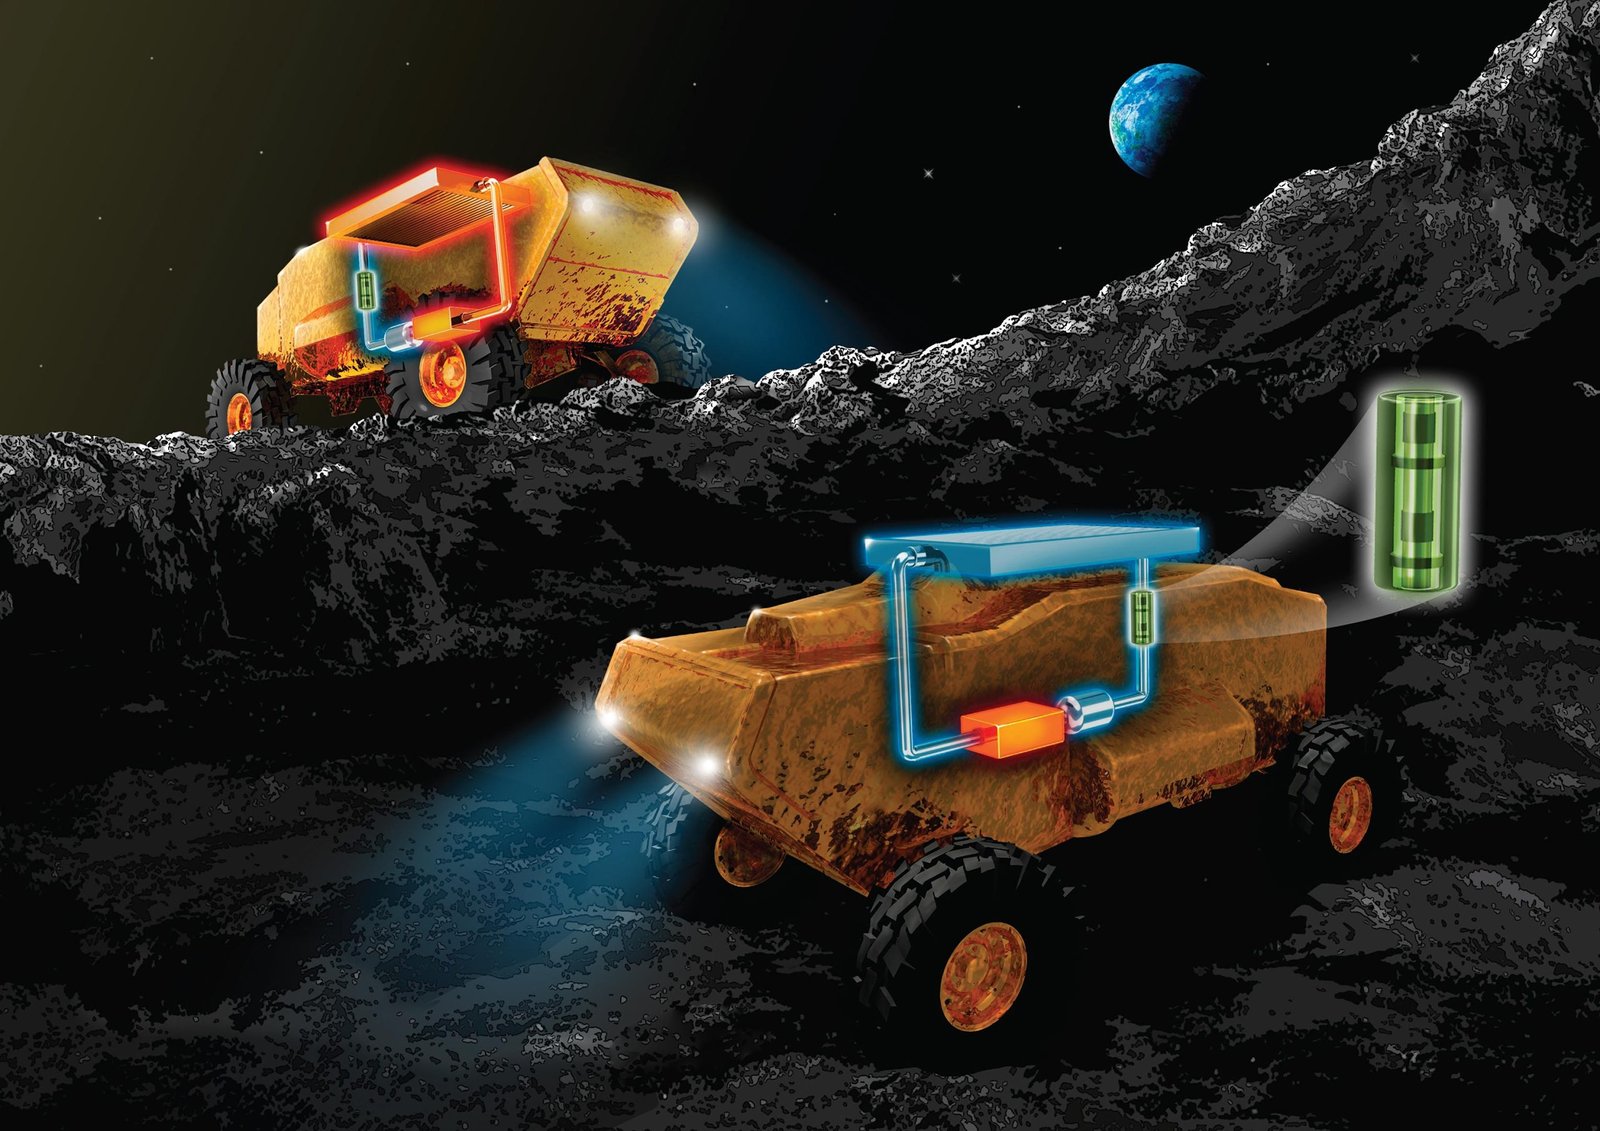 Revolutionary Rover Tech Tames Extreme Moon Temperatures